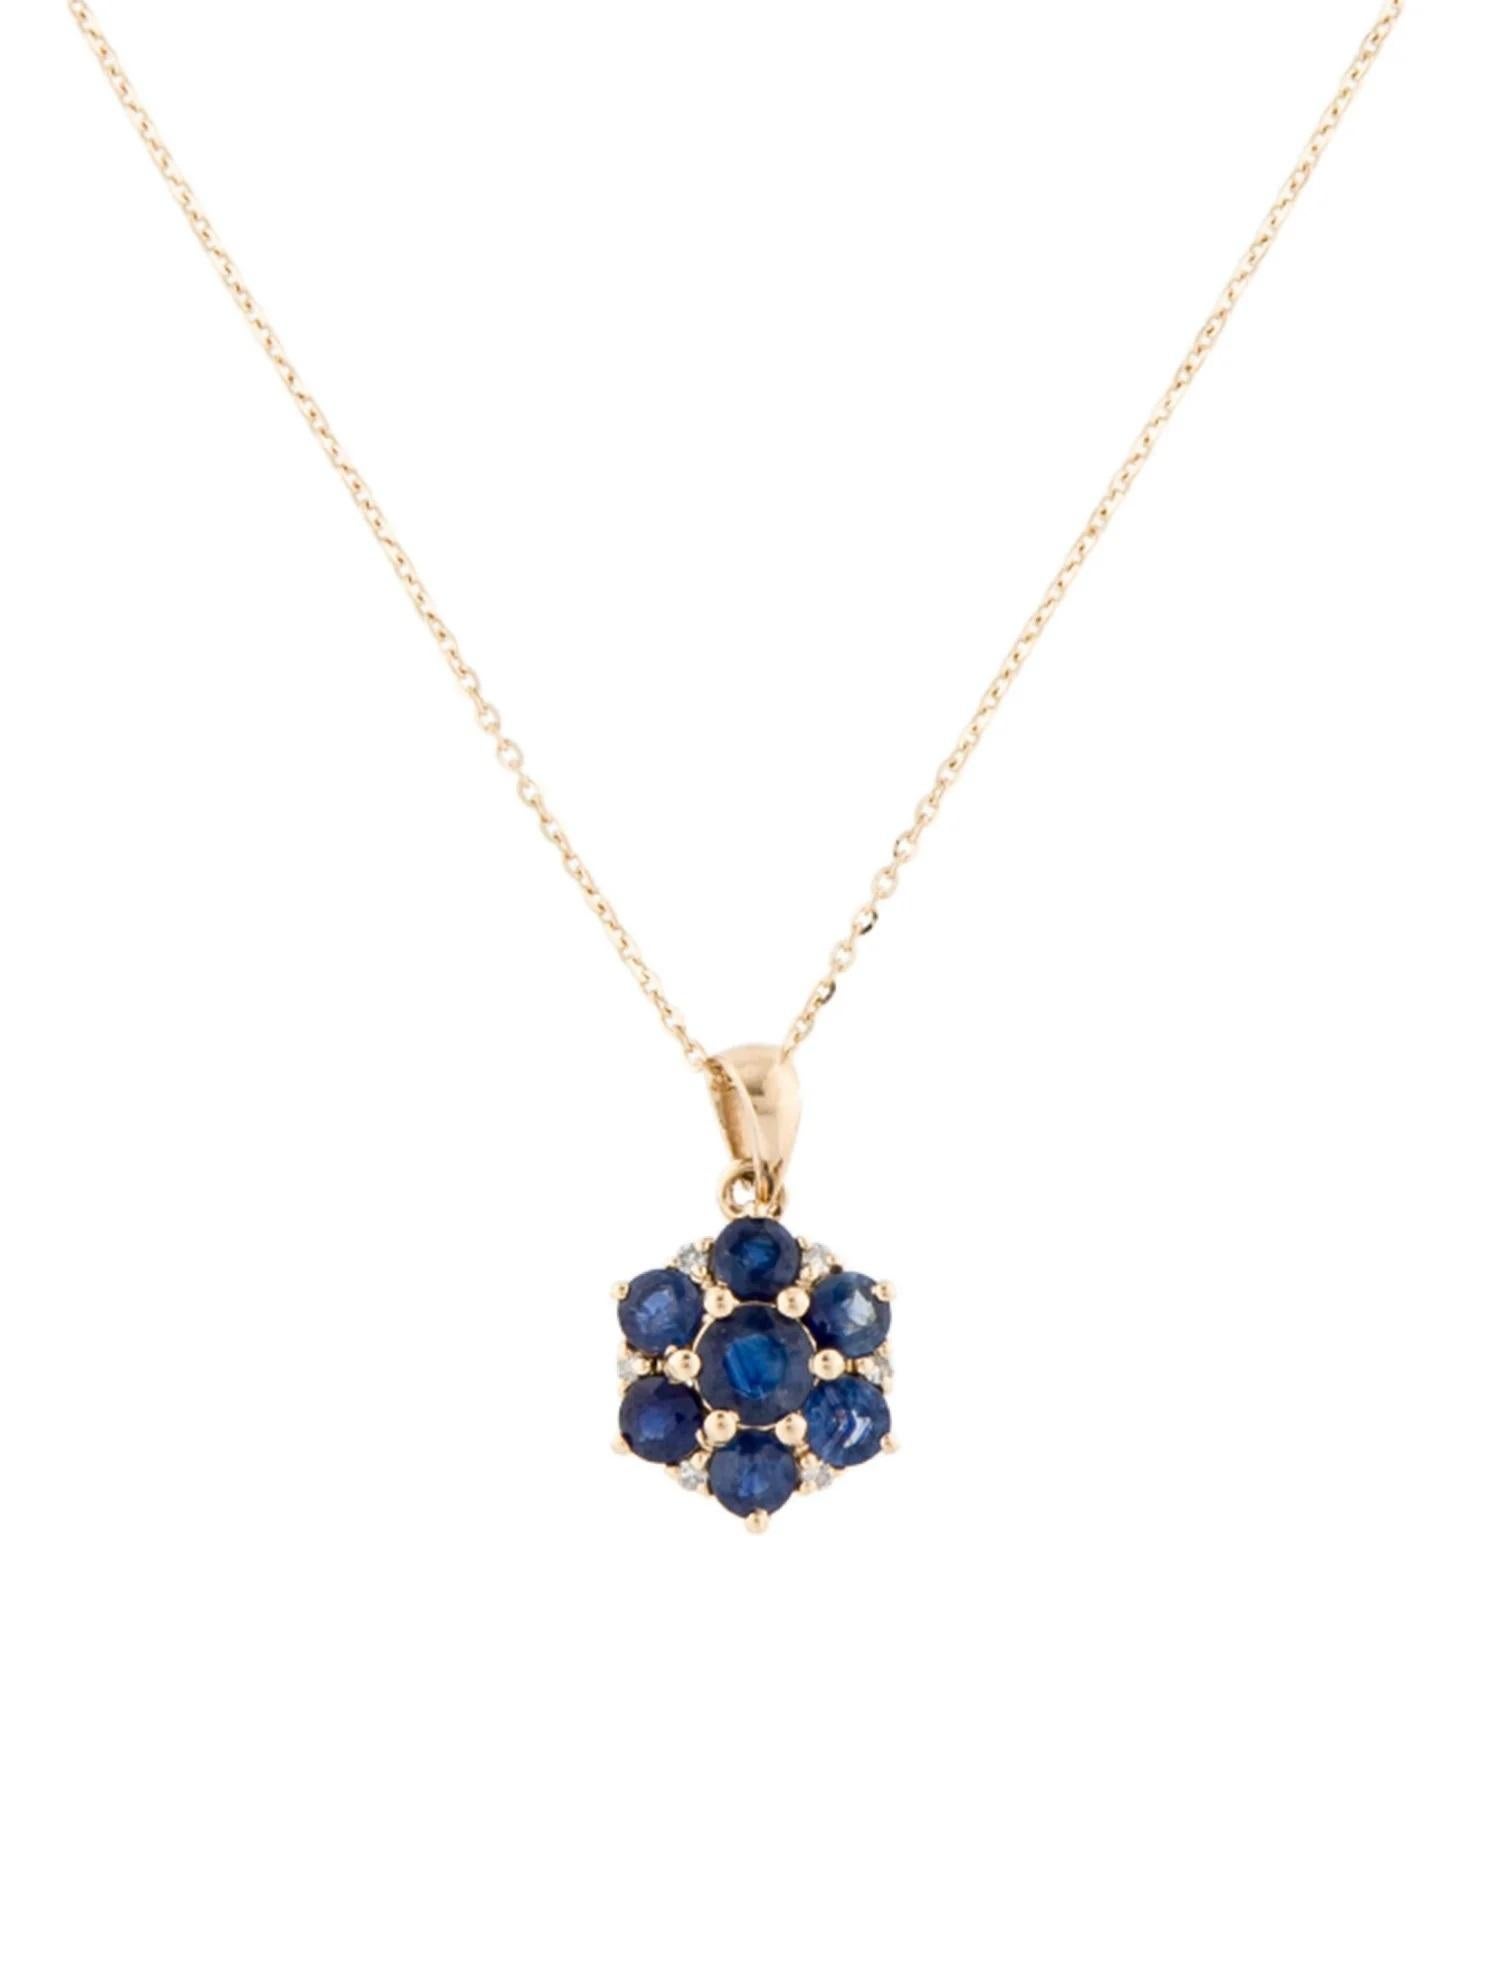 Round Cut 14K Sapphire Flower Pendant Necklace - 1.07 Carat Round Sapphire - 16